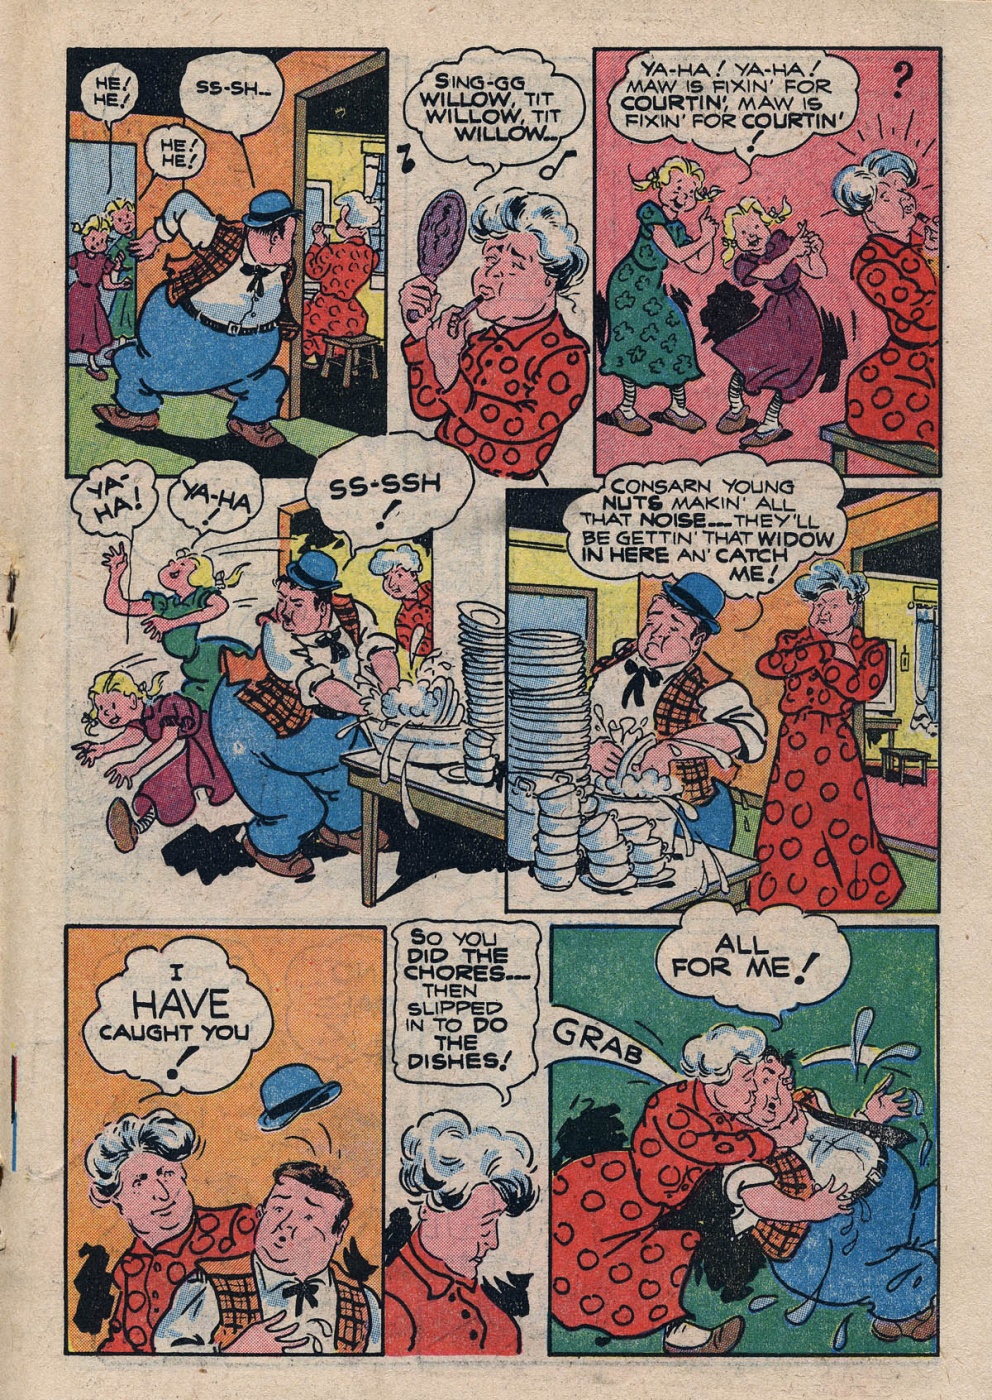 Funny Comic Strips - Abbott and Costello 001 (Feb 1948) 19